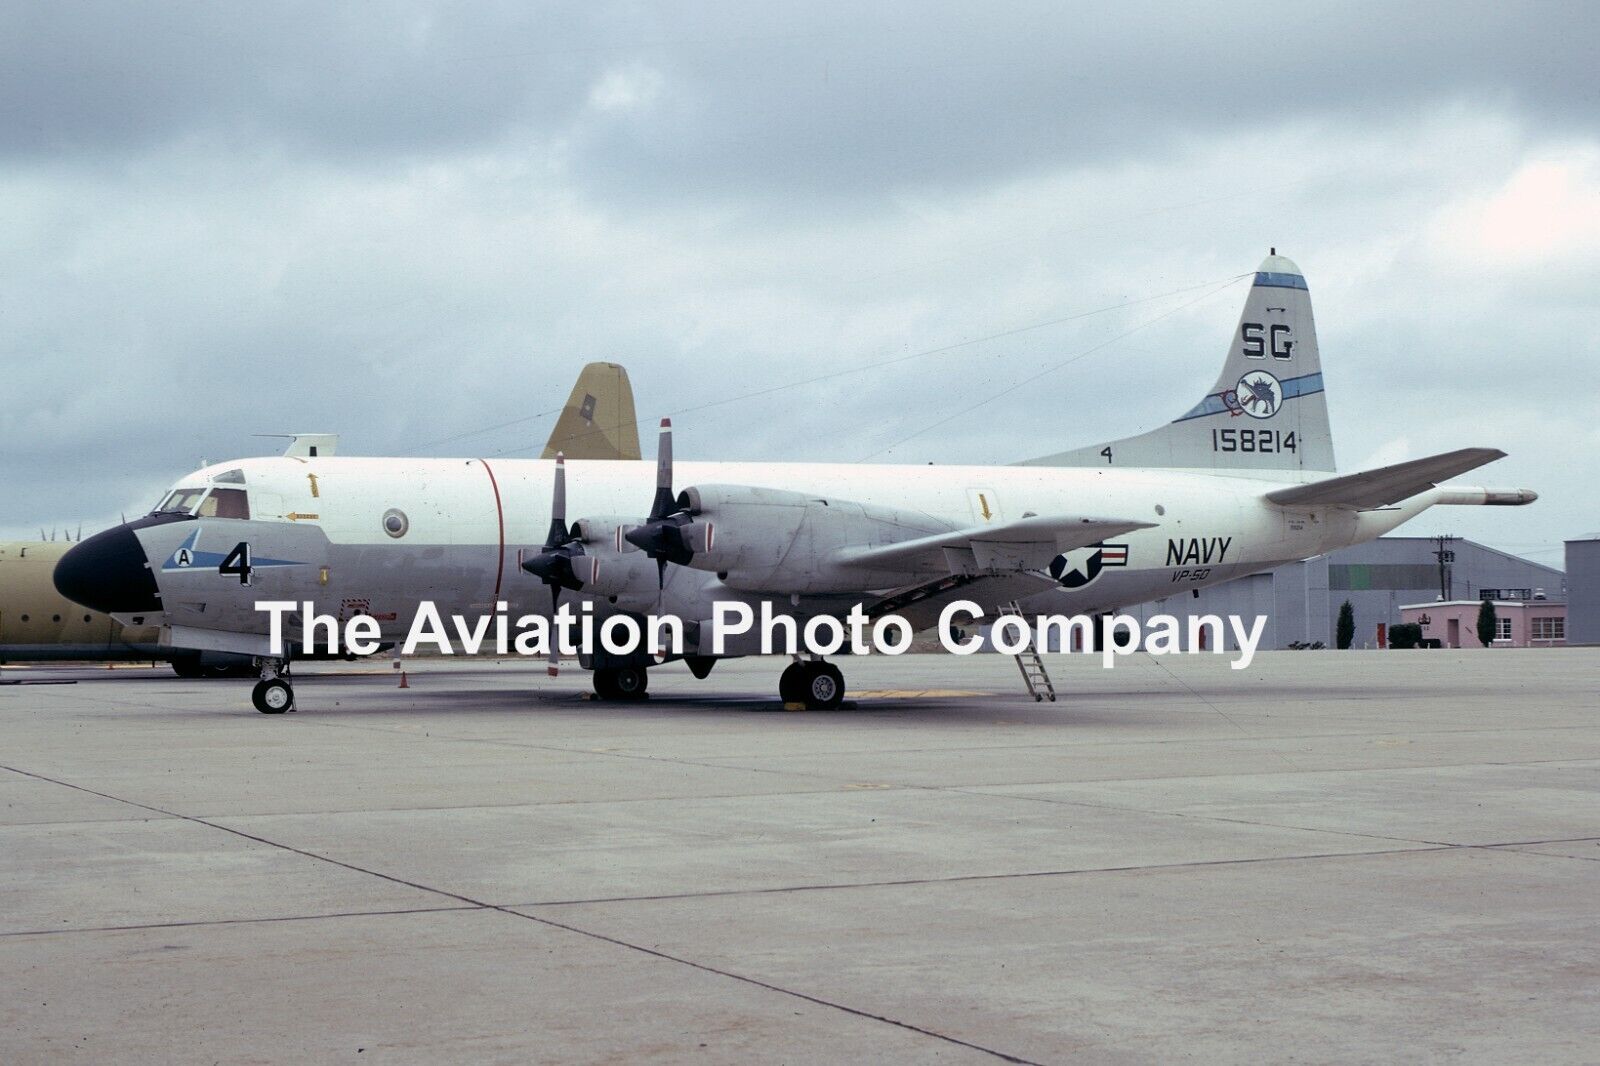 US Navy VP-50 Lockheed P-3C Orion 158214/SG-4 (1975) Photograph